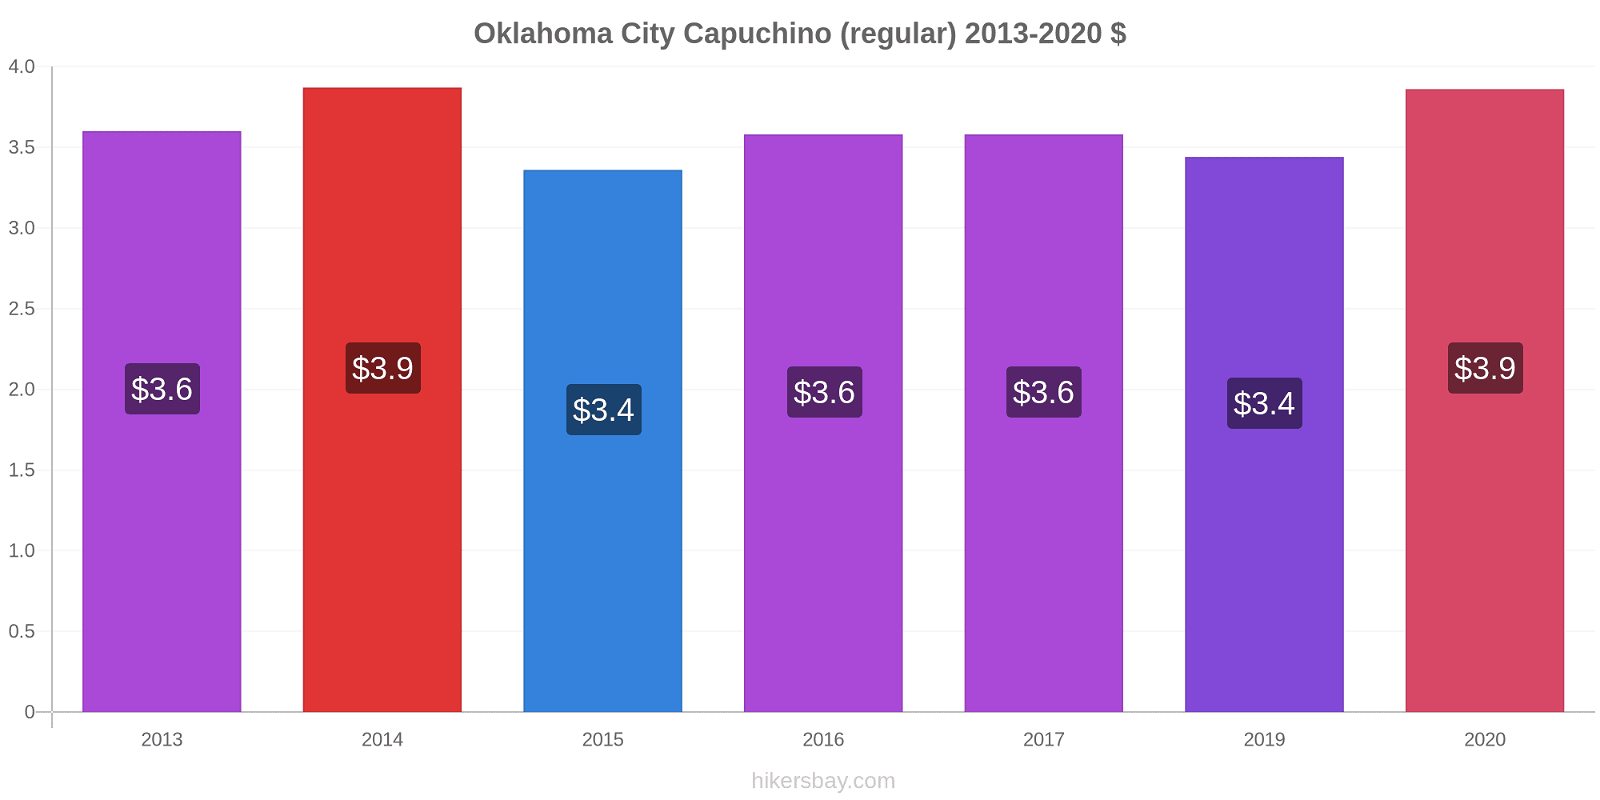 Oklahoma City cambios de precios Capuchino (regular) hikersbay.com